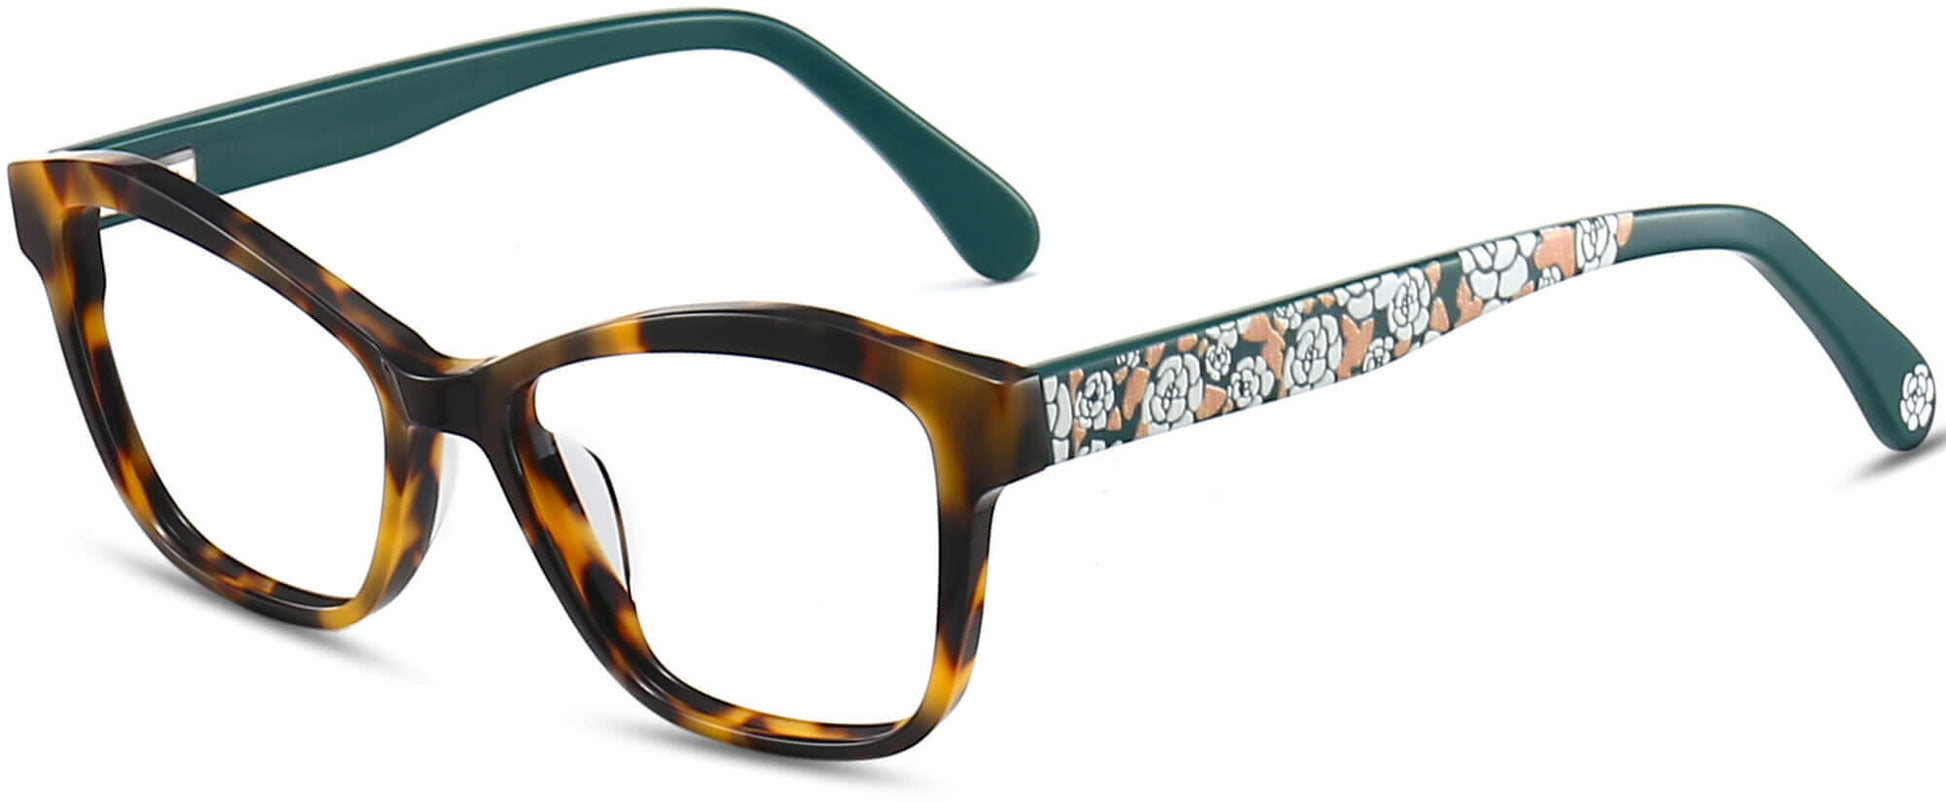 Daniela Cateye Tortoise Eyeglasses from ANRRI, angle view